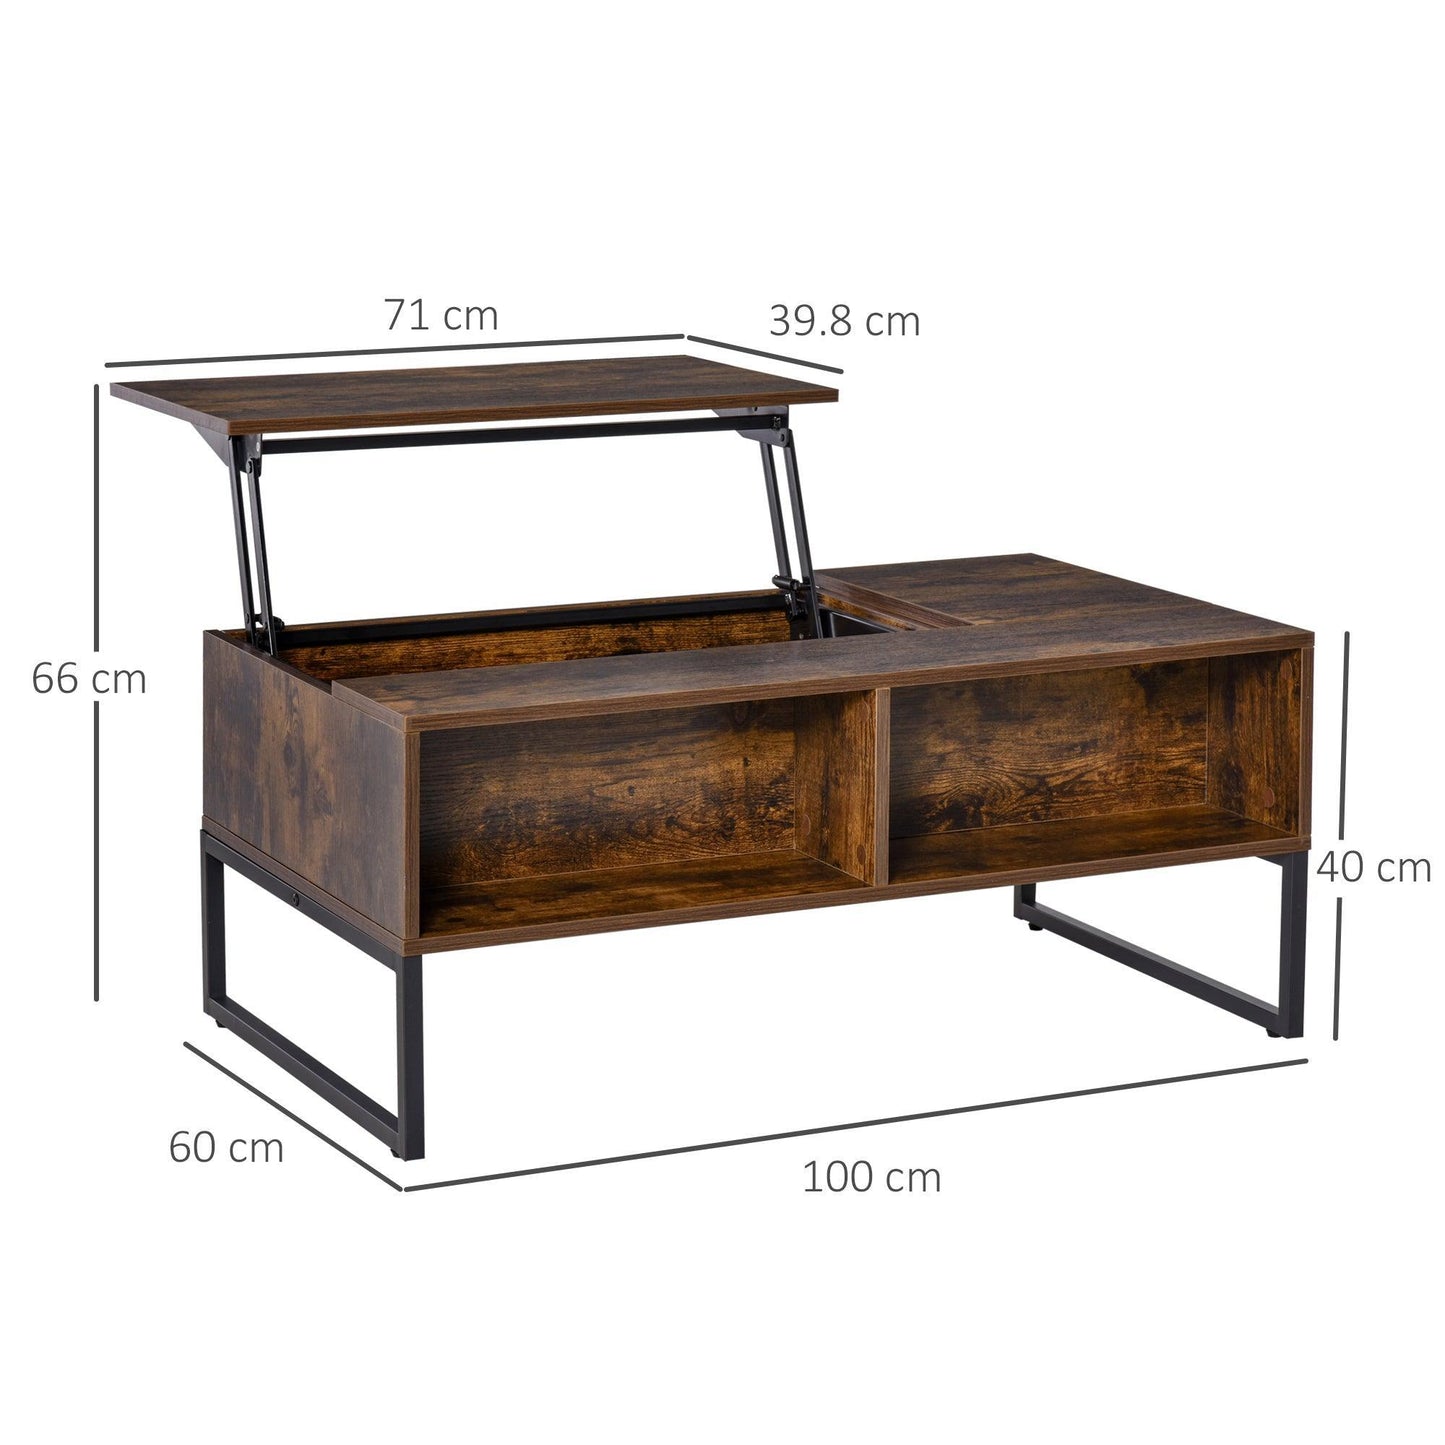 HOMCOM Extendable Coffee Table with Hidden Storage Drawer - Brown - ALL4U RETAILER LTD